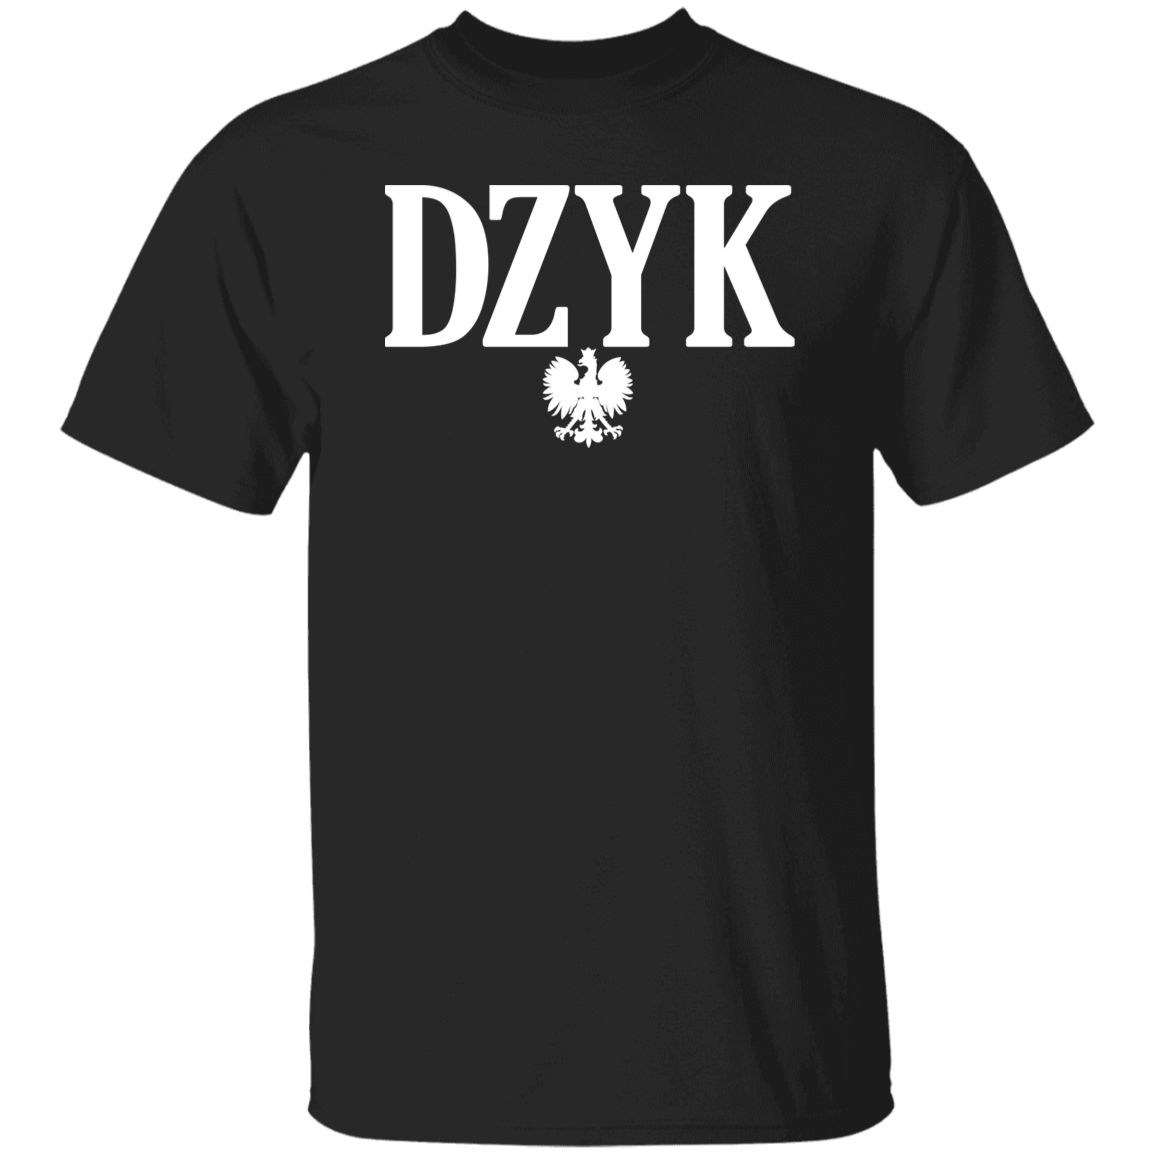 DZYK Polish Surname Ending Apparel CustomCat G500 5.3 oz. T-Shirt Black S